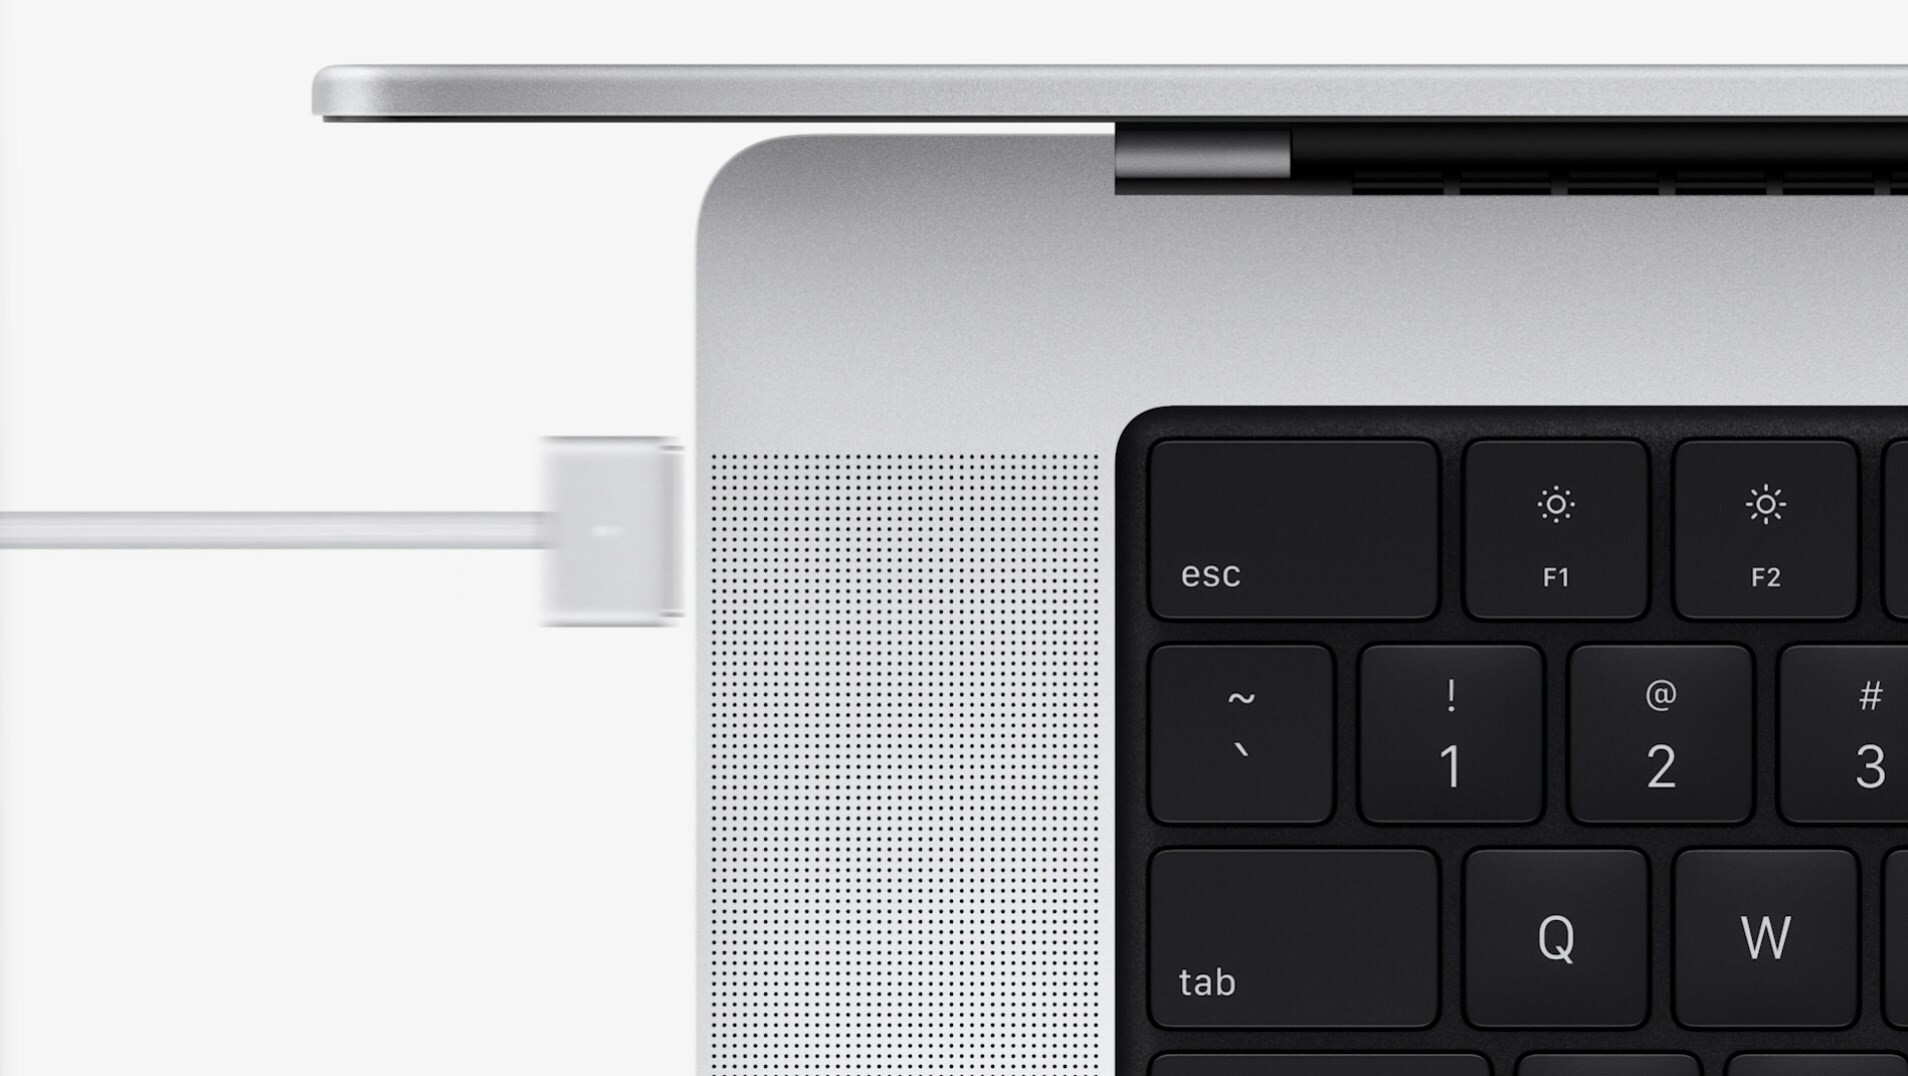 Mac 18 أكتوبر 2021 0 تعليقات
Apple يعيد MagSafe إلى Mac مع MacBook Pro الجديد